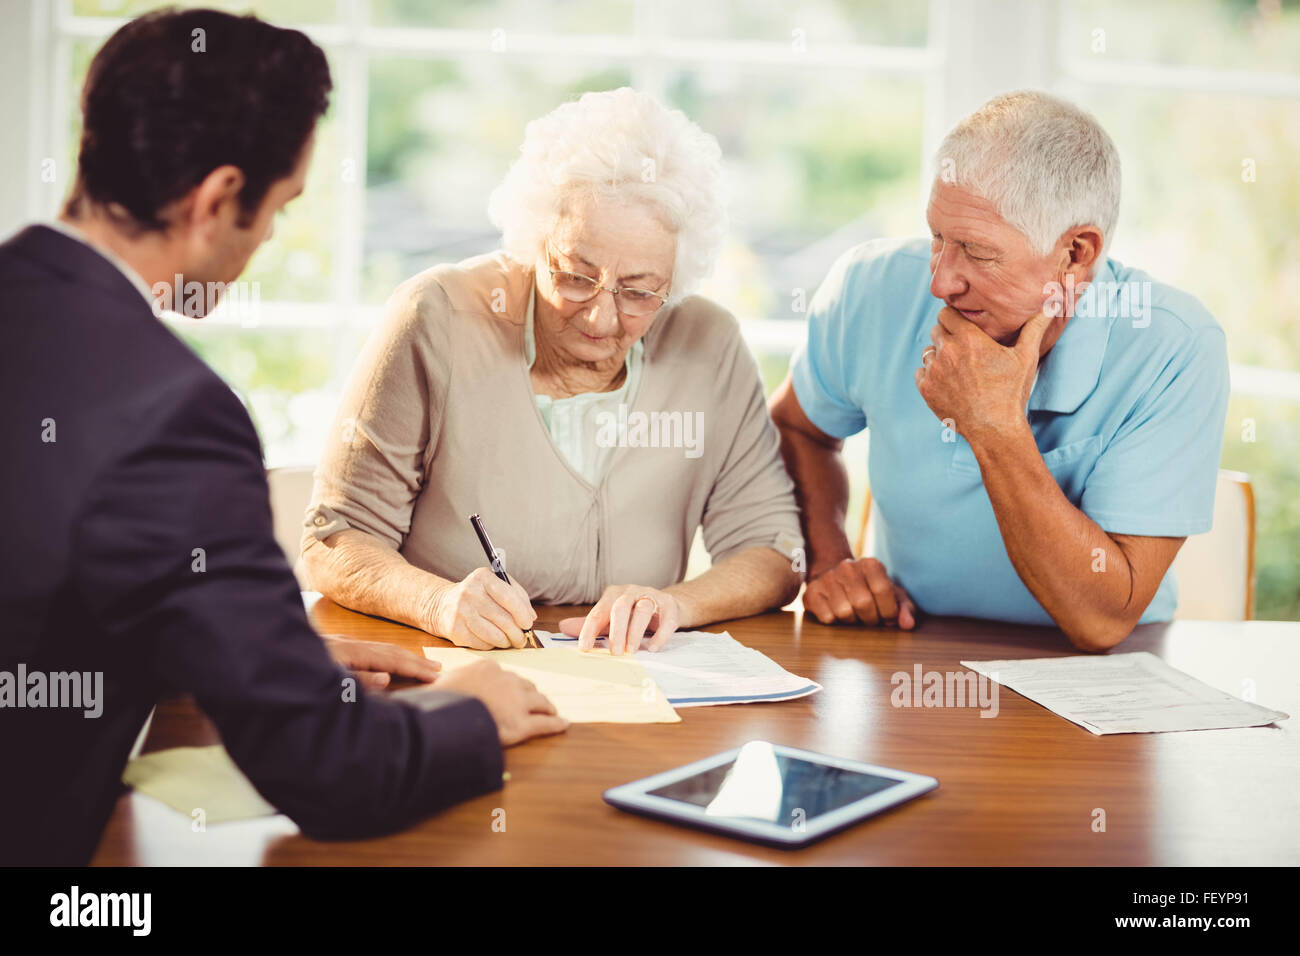 Senior woman signing document Stock Photo